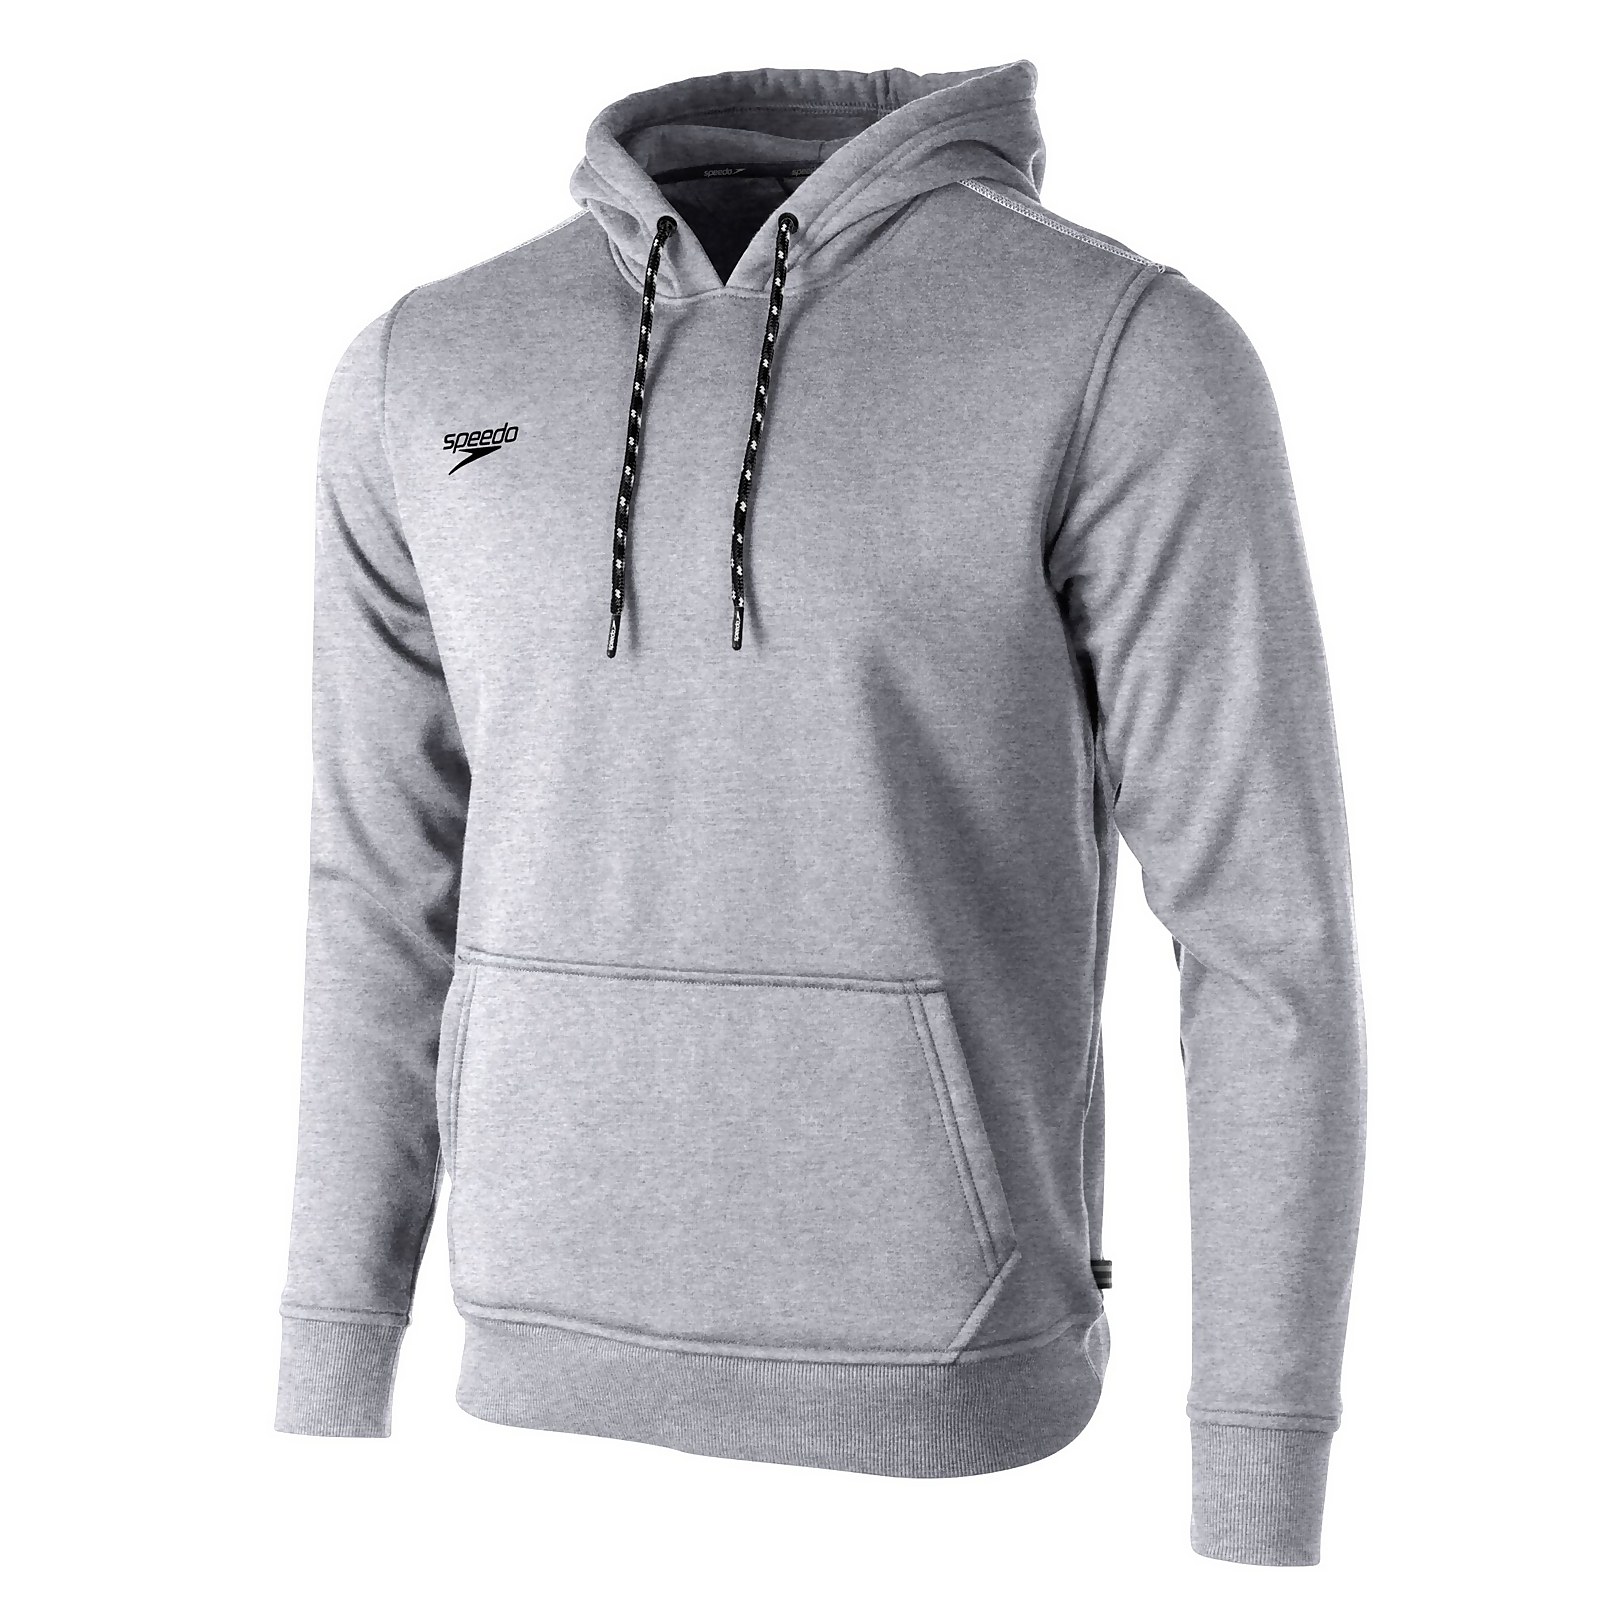 Speedo  Long Sleeve Hooded Sweatshirt - L    : Gray (13243631 5059937084435) photo